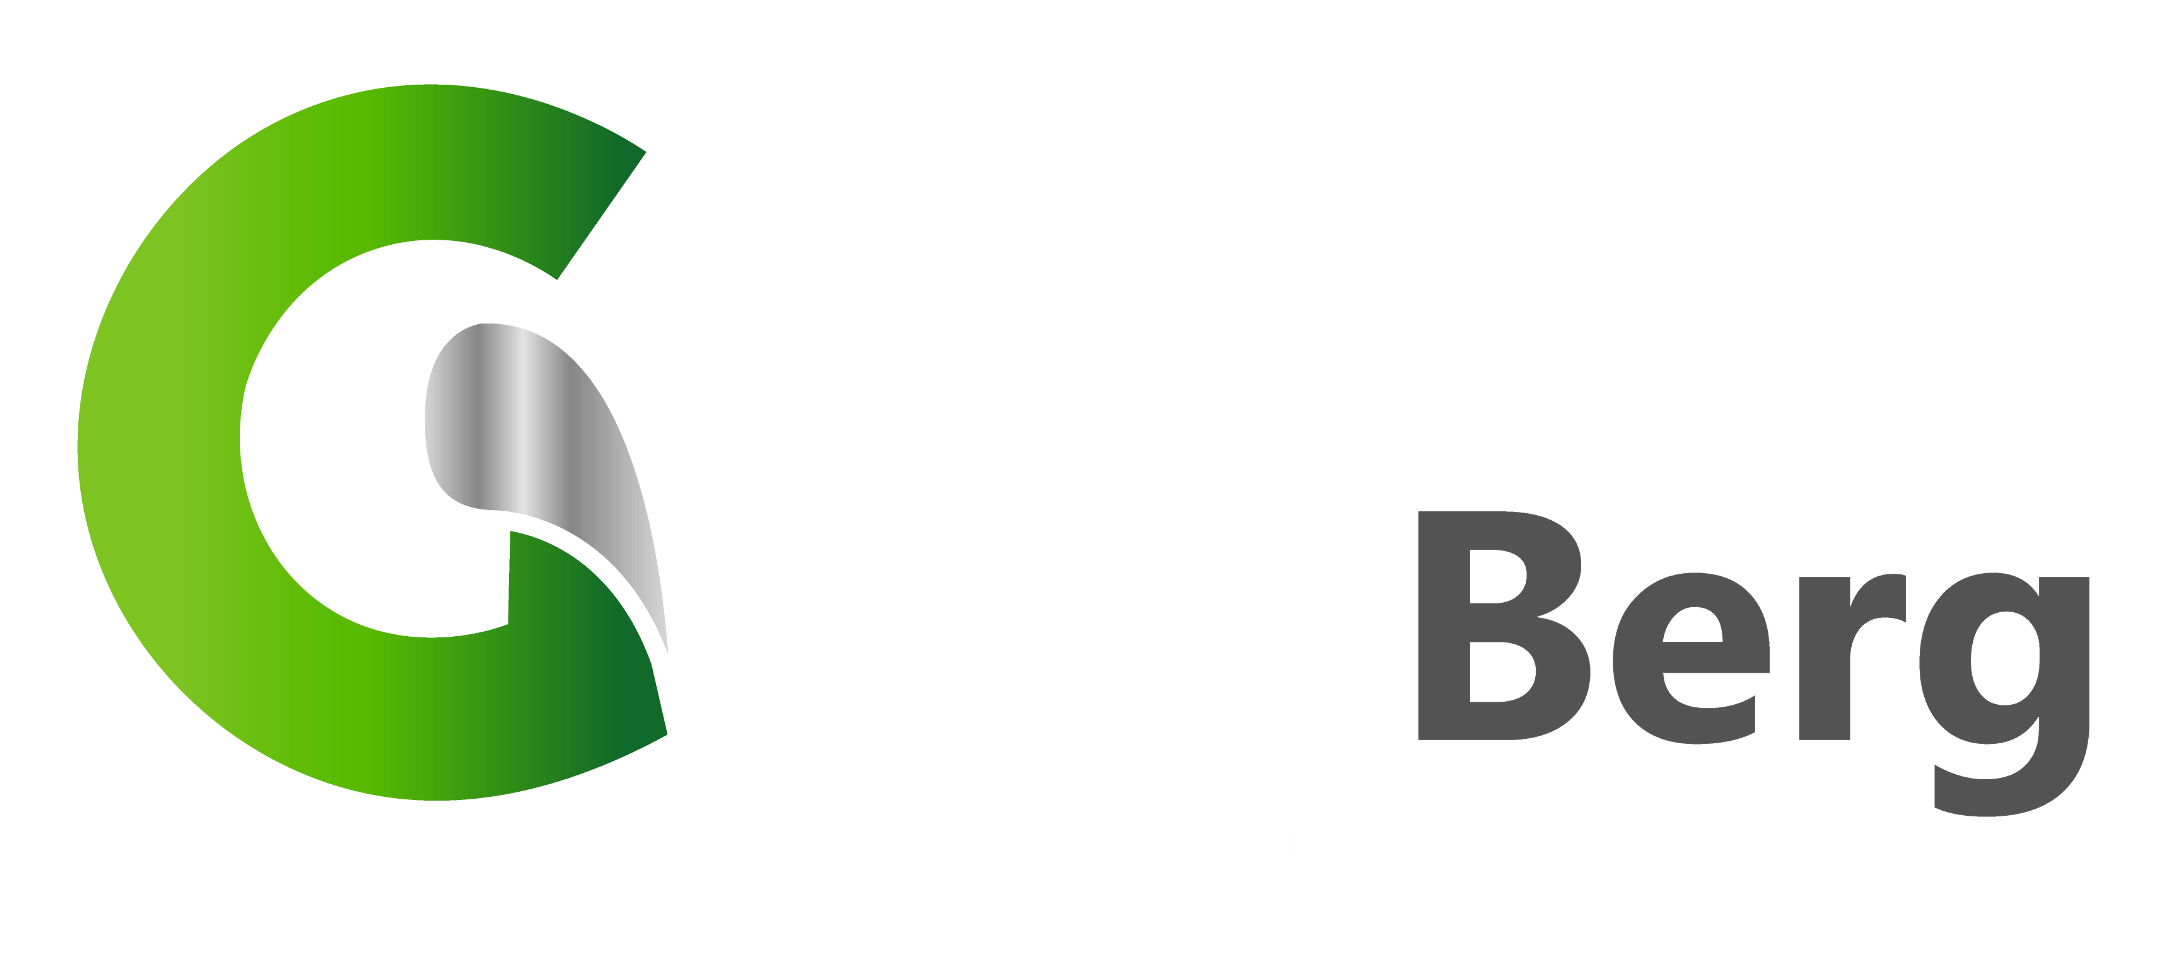 Greenberg Logo - GreenBerg International Ltd